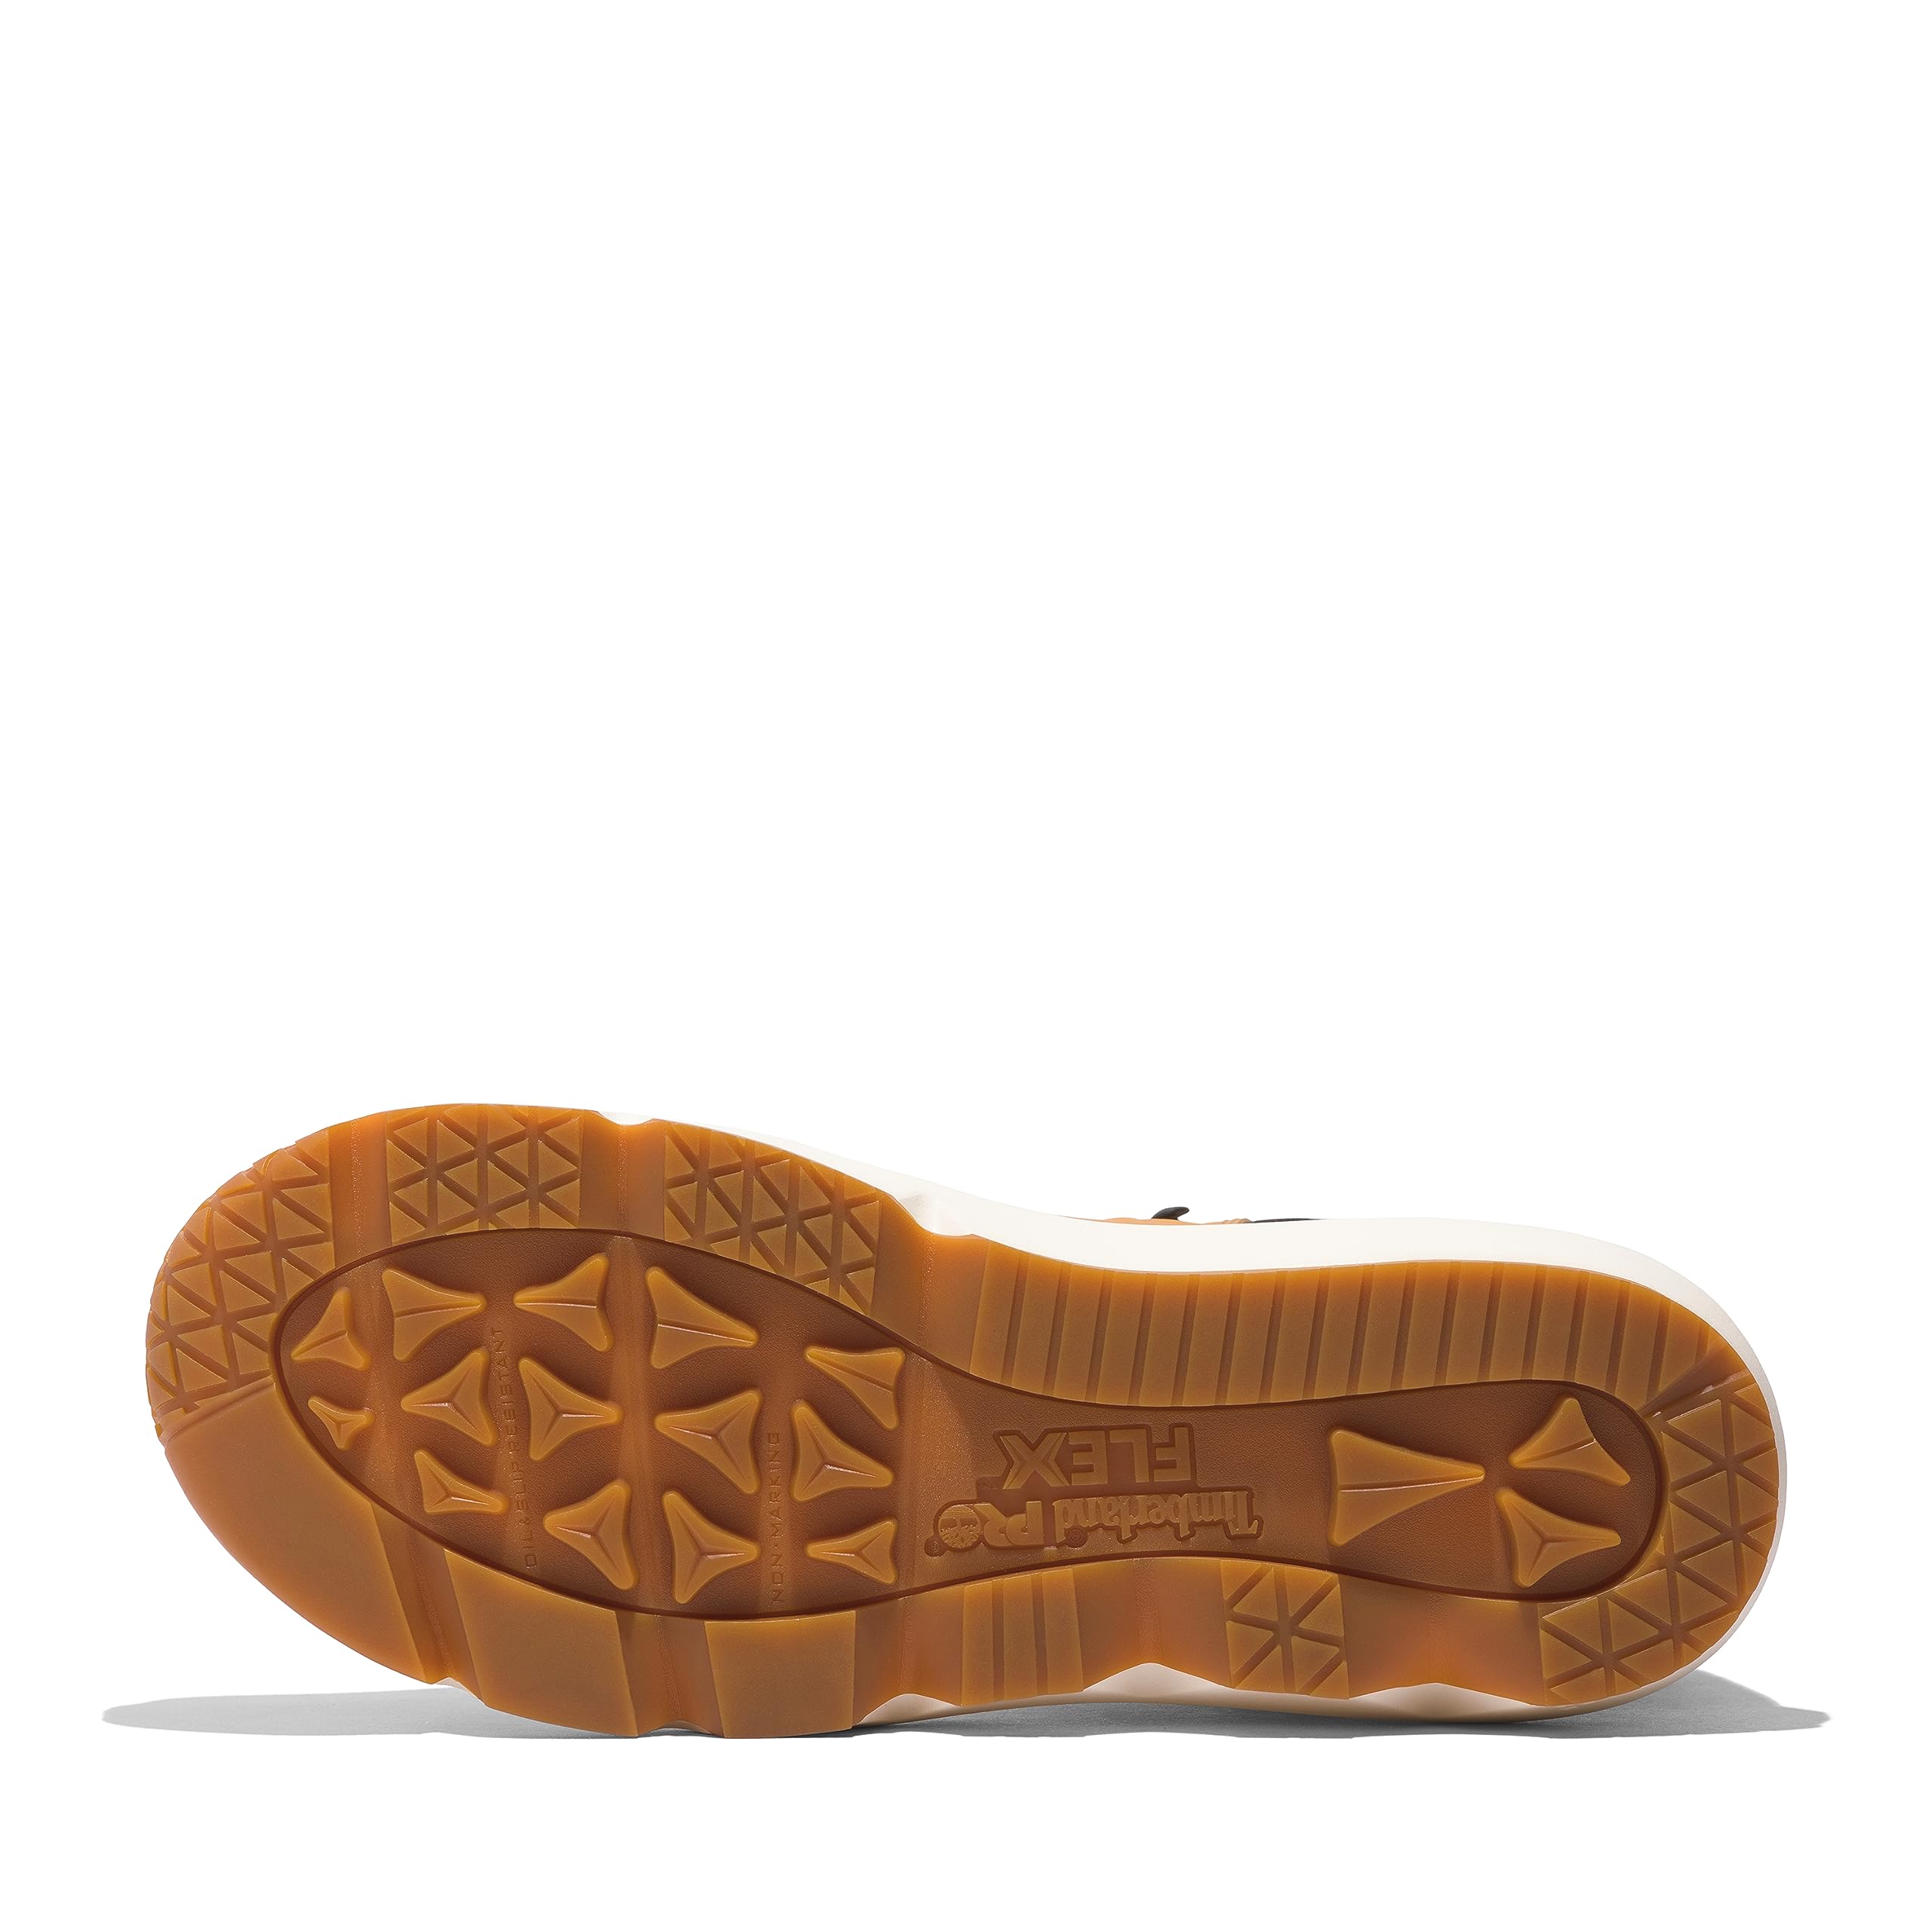 Timberland PRO Men's Morphix 6 Inch Composite Safety Toe Waterproof Industrial Casual Sneaker Boot